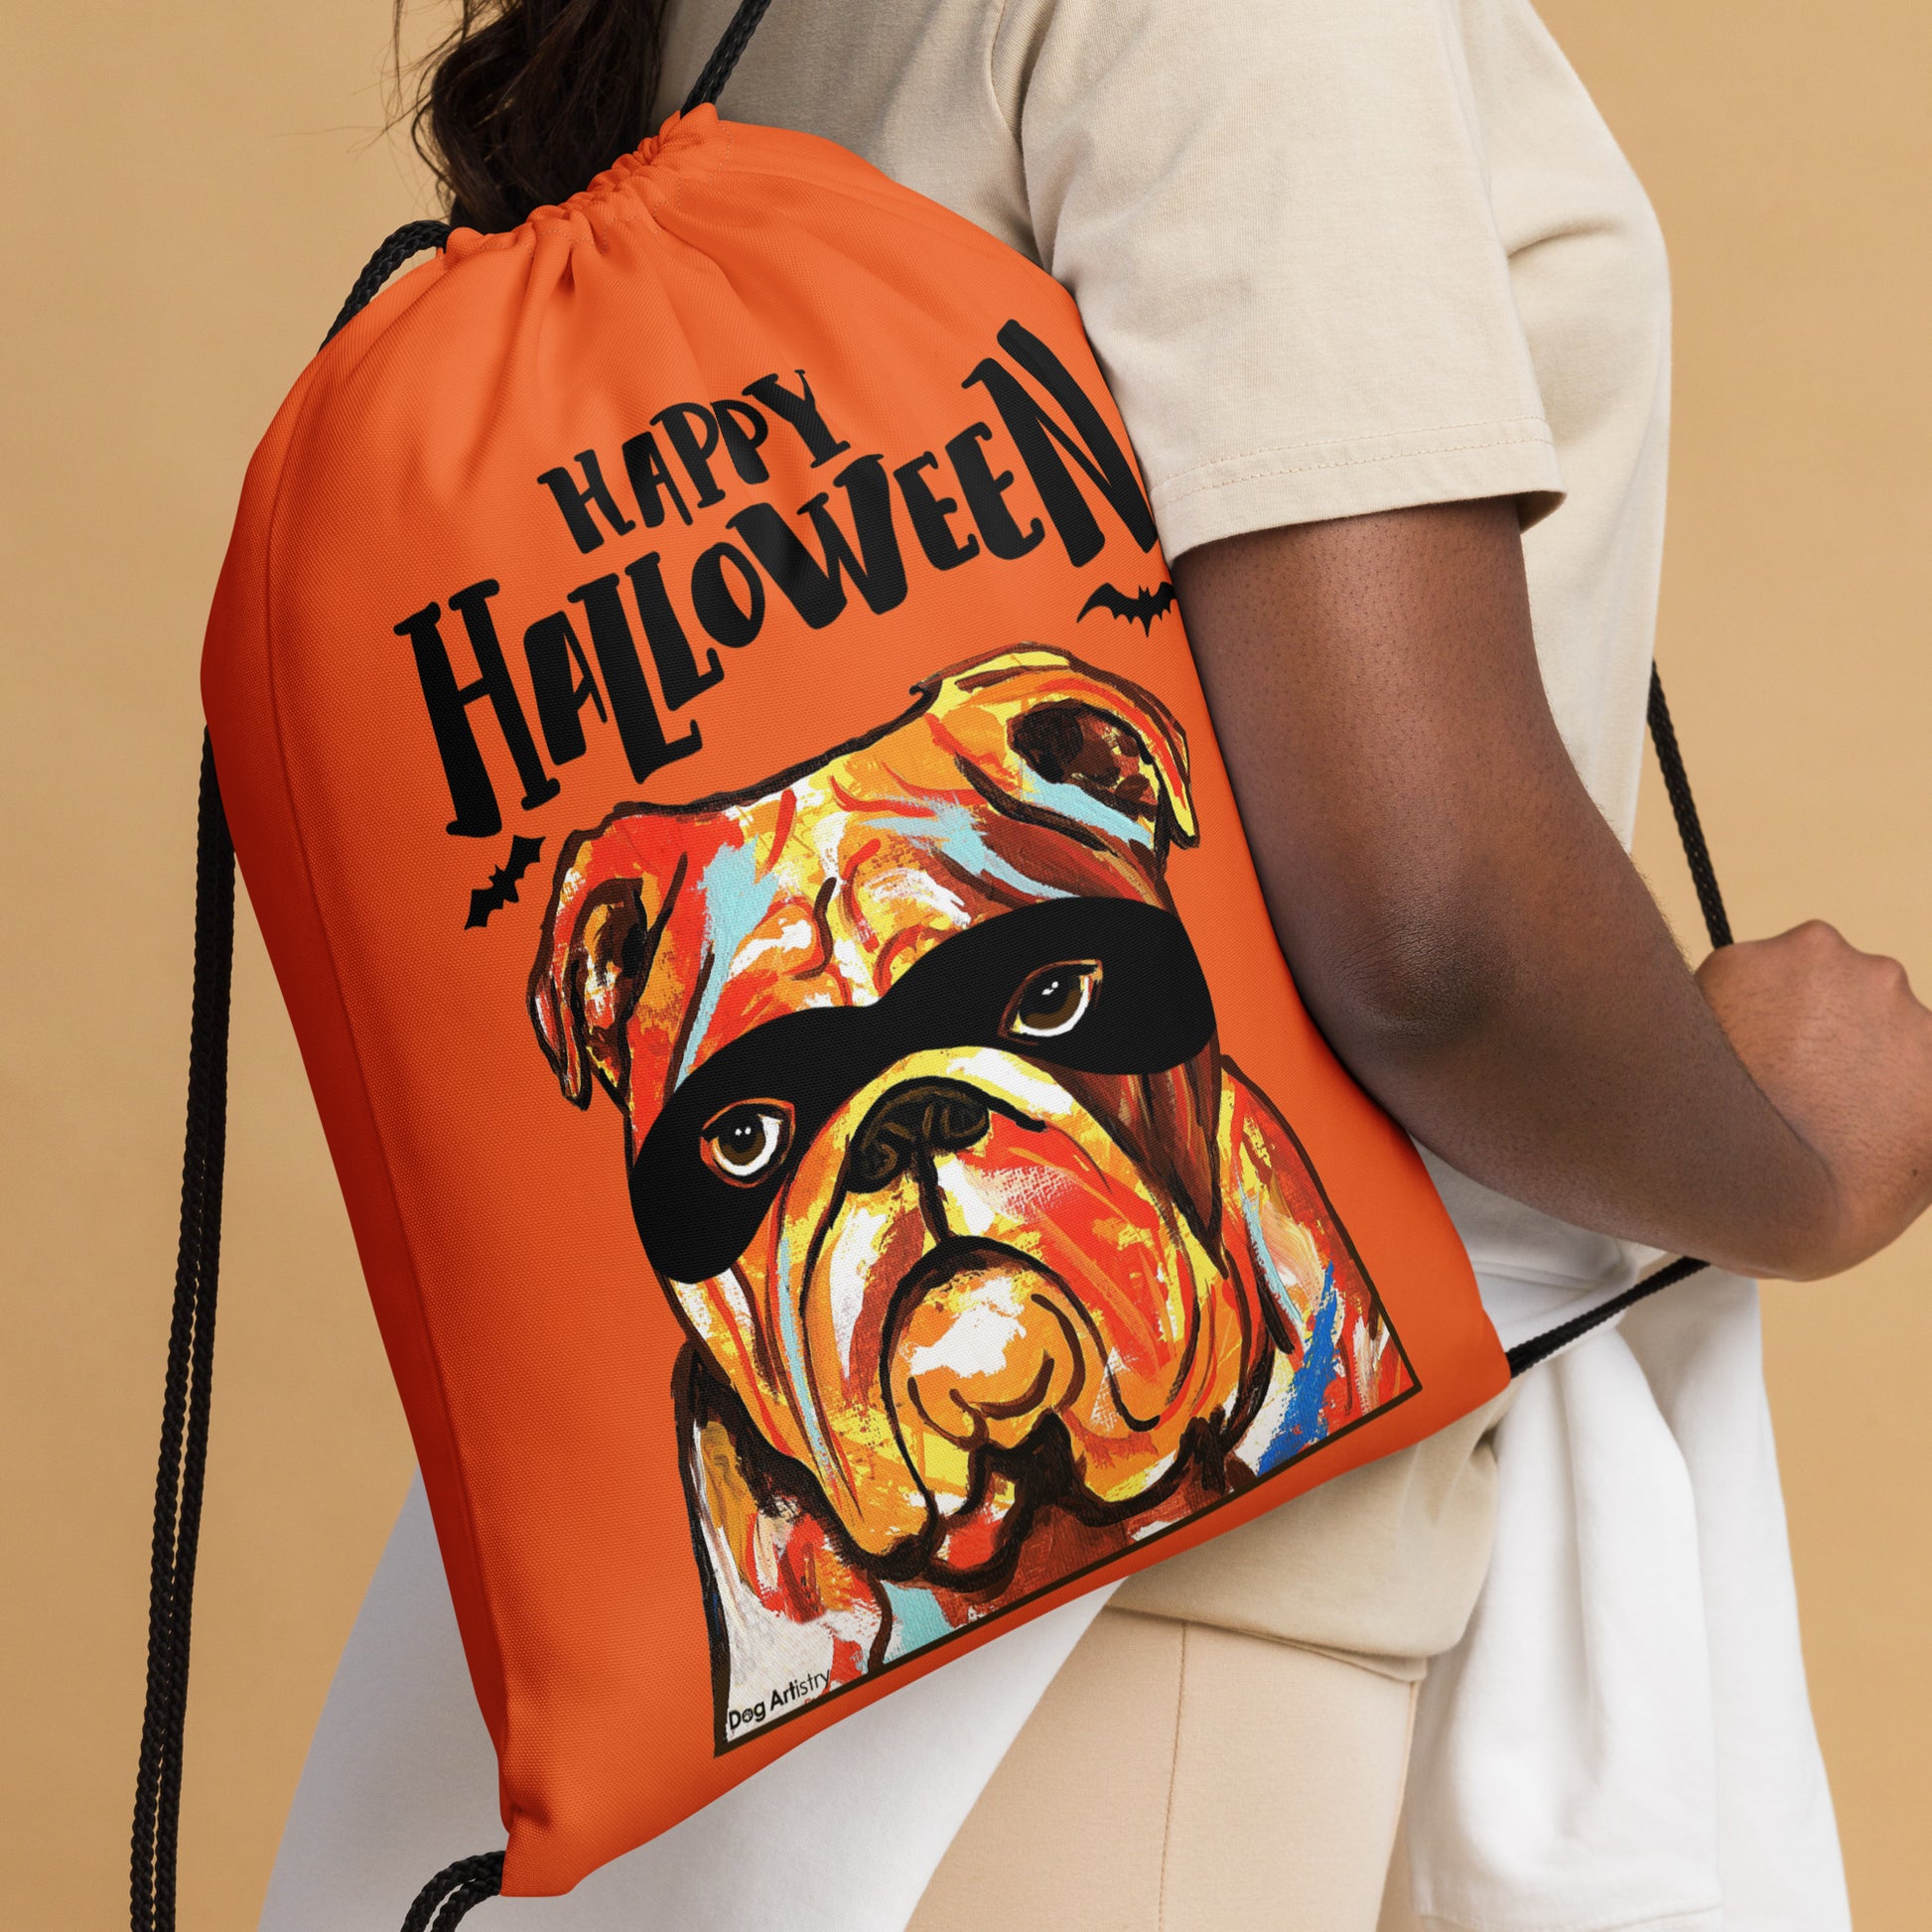 Happy Halloween English Bulldog wearing mask Orange drawstring bag by Dog Artistry Halloween candy bag. Closeup.